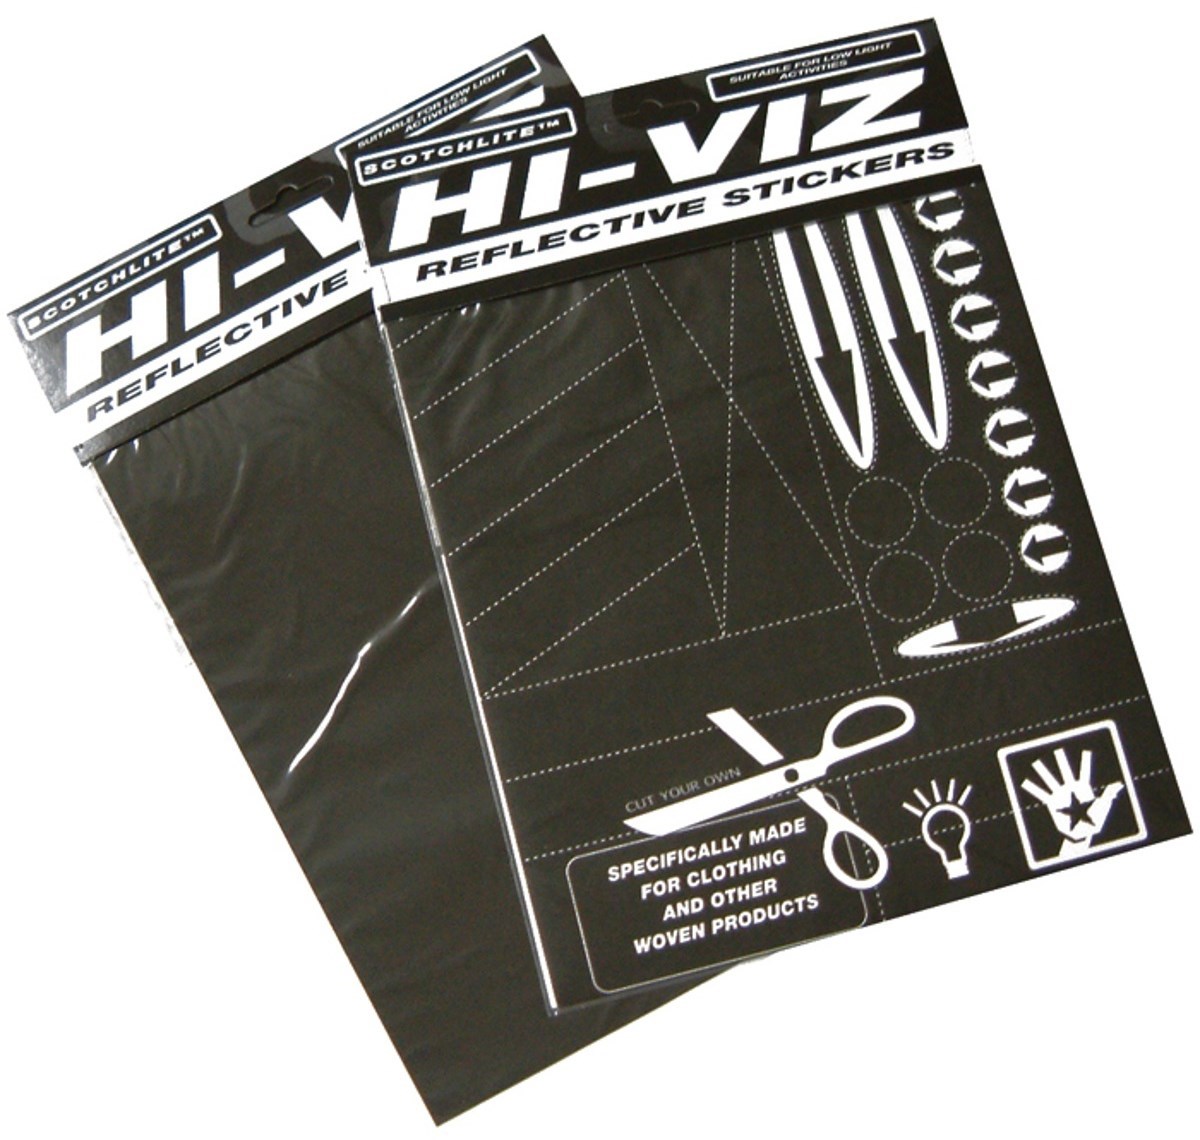 Hump Hi-viz Pressure Sensitive Sticker Material product image